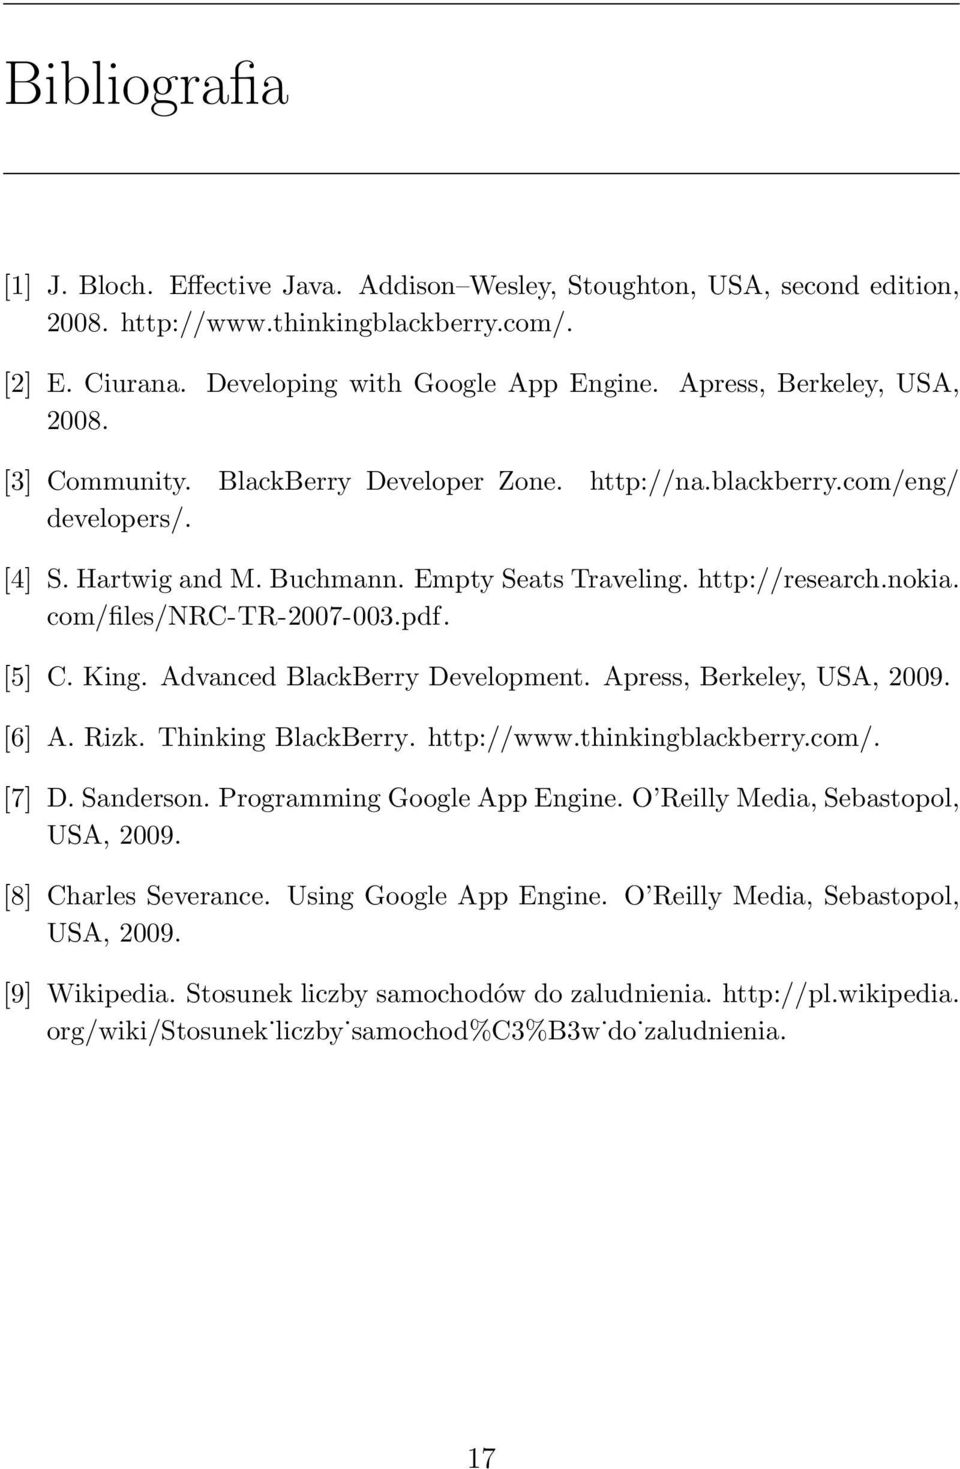 com/files/nrc-tr-2007-003.pdf. [5] C. King. Advanced BlackBerry Development. Apress, Berkeley, USA, 2009. [6] A. Rizk. Thinking BlackBerry. http://www.thinkingblackberry.com/. [7] D. Sanderson.